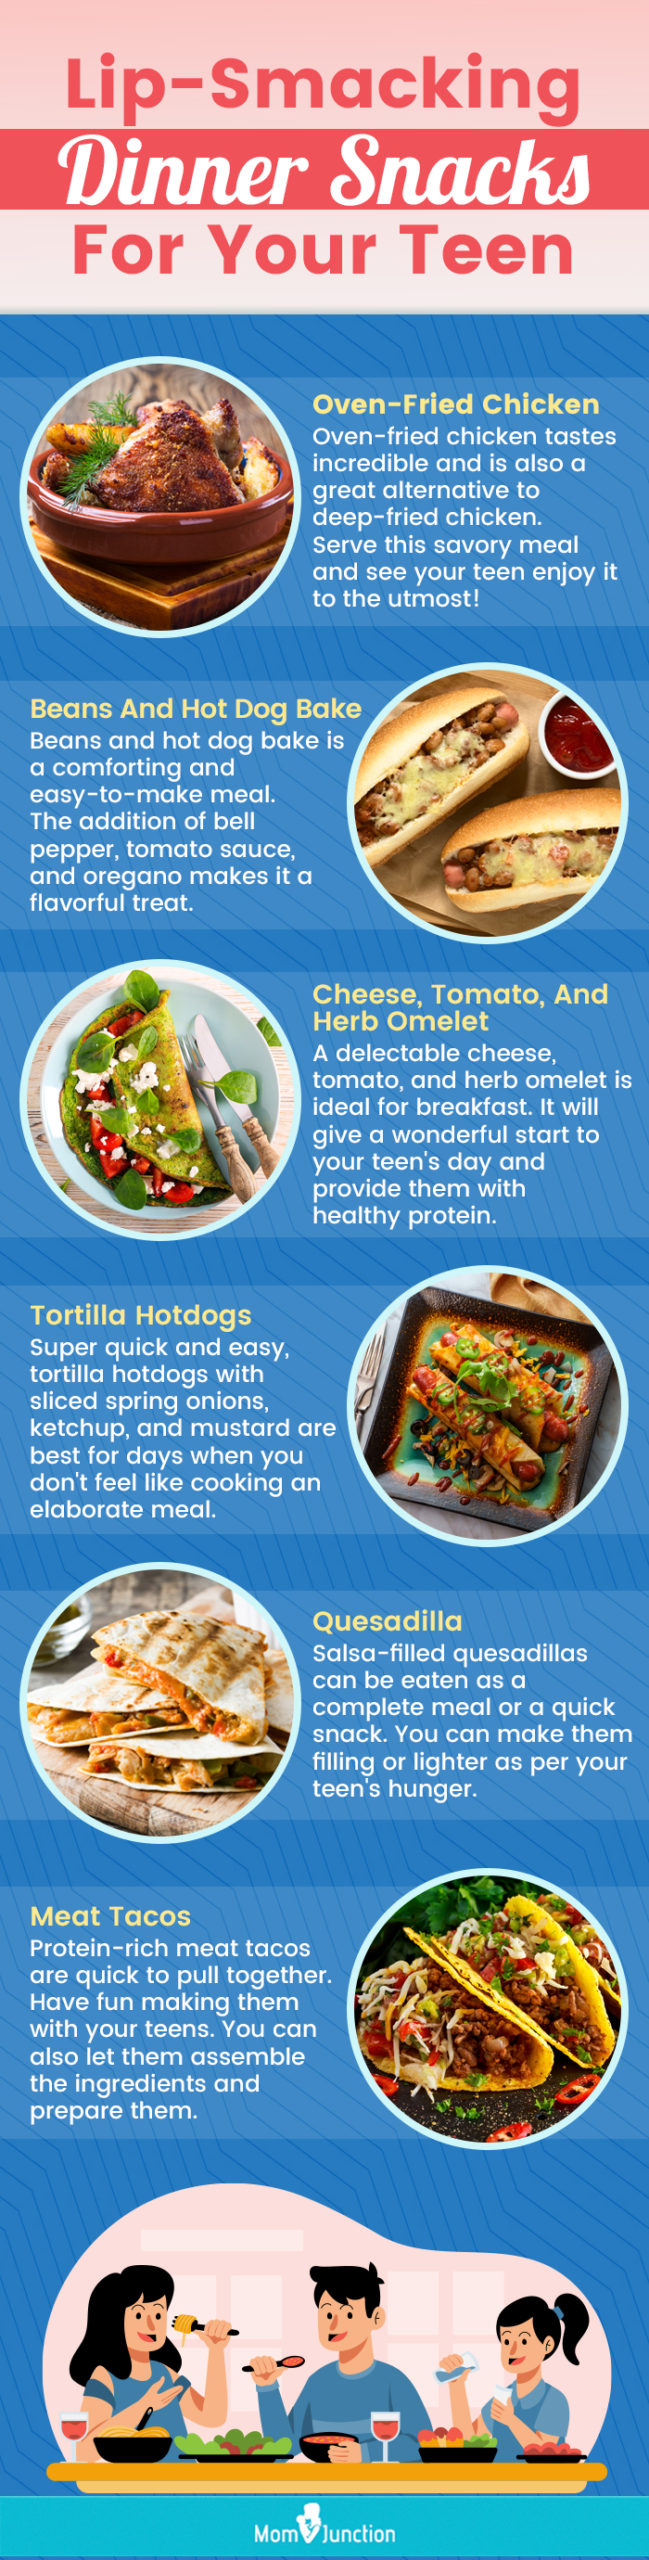 lip-smacking dinner snacks for your teen (infographic)